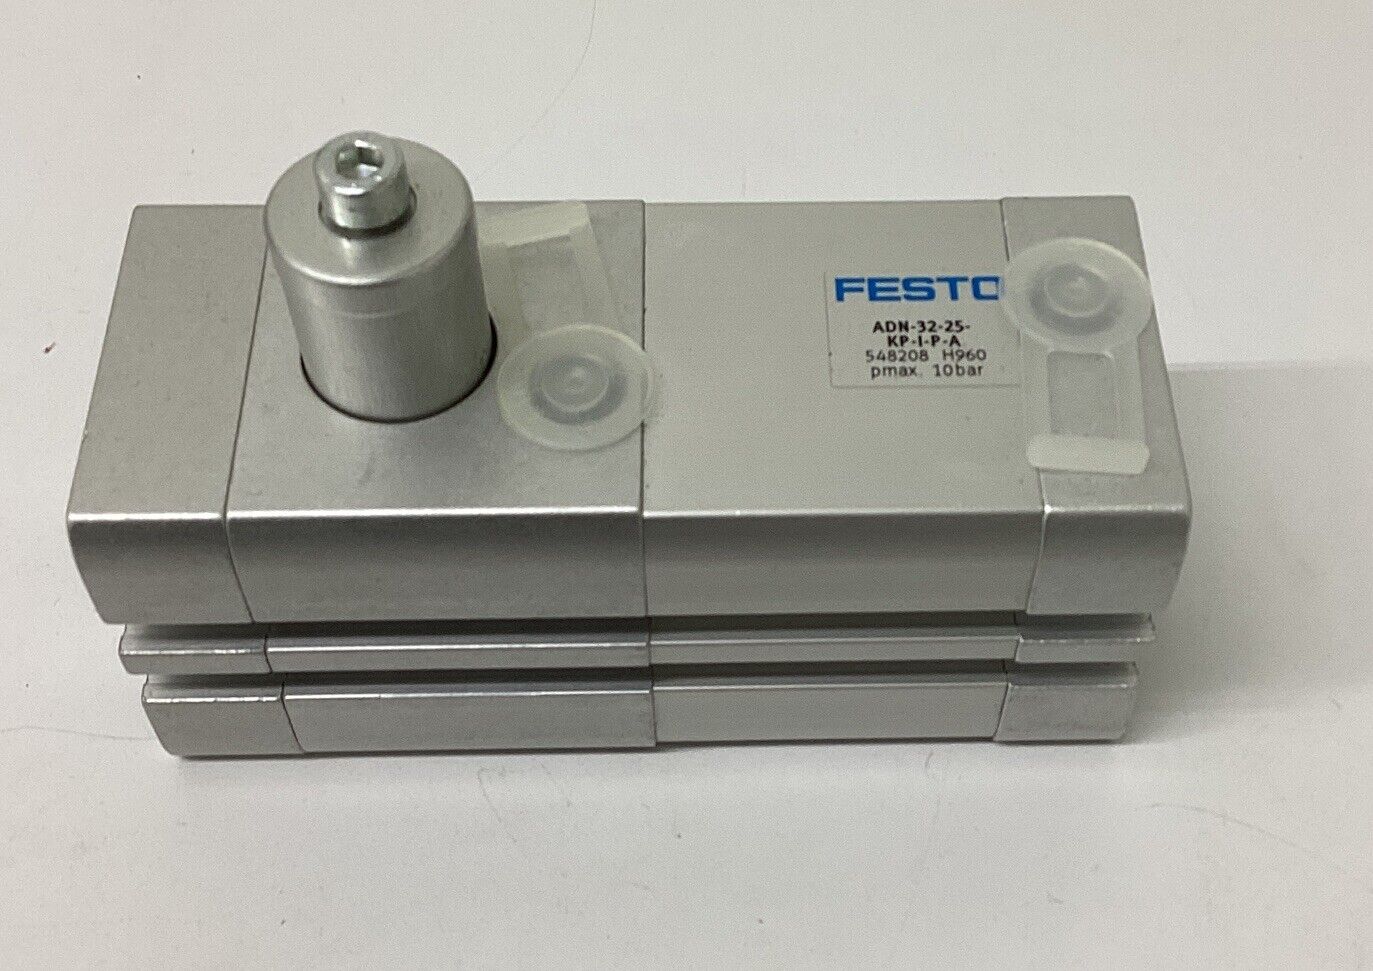 Festo ADN-32-25-KP-1-P-A / 548208 Air Cylinder 32mm Piston x 25mm Stroke (BL290)